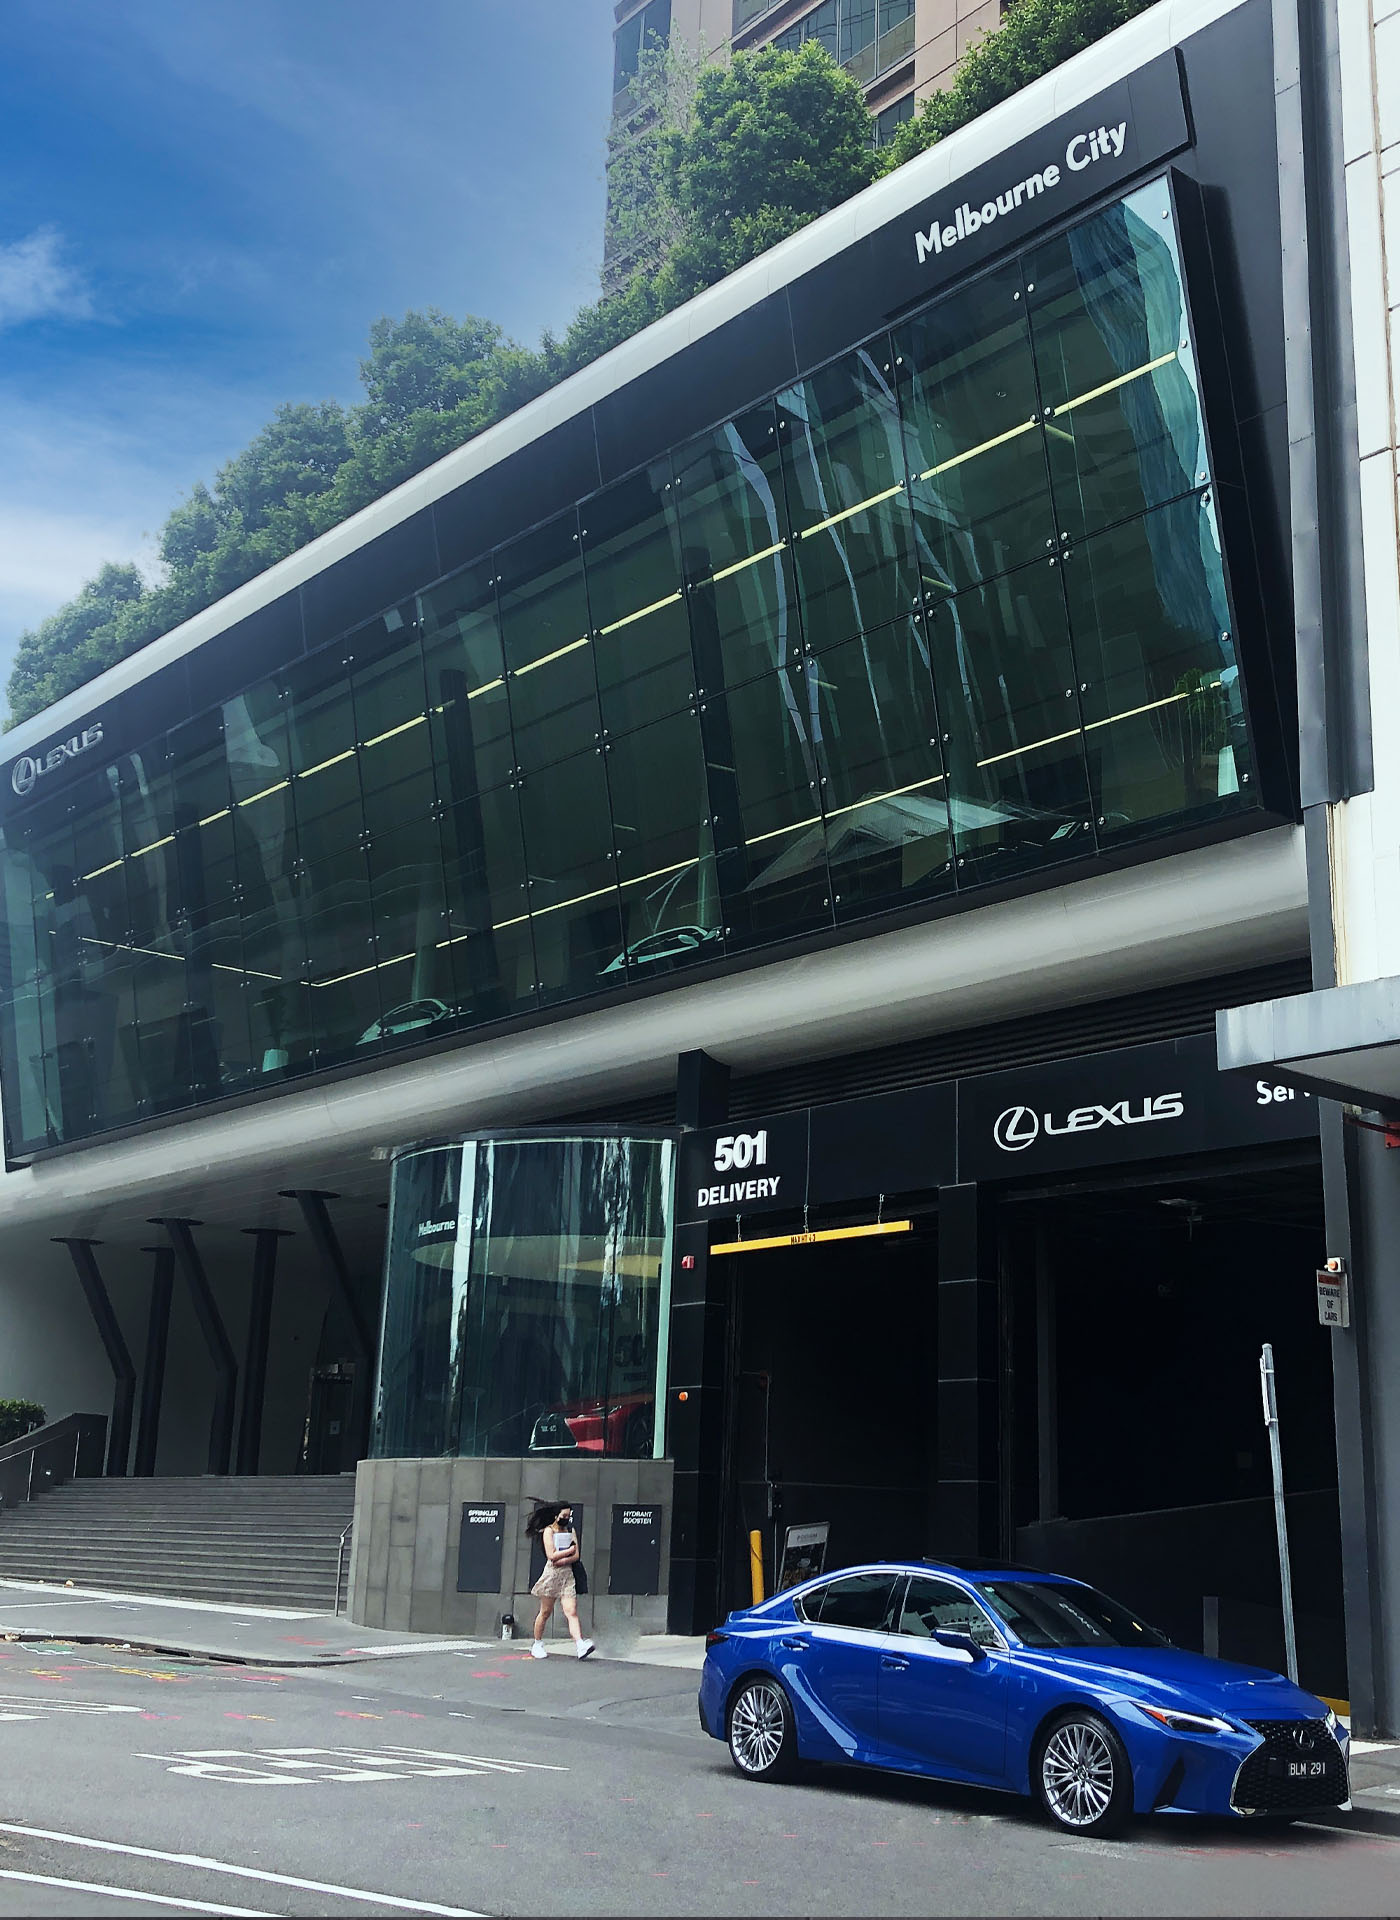 Entry to Melbourne City Lexus Service department